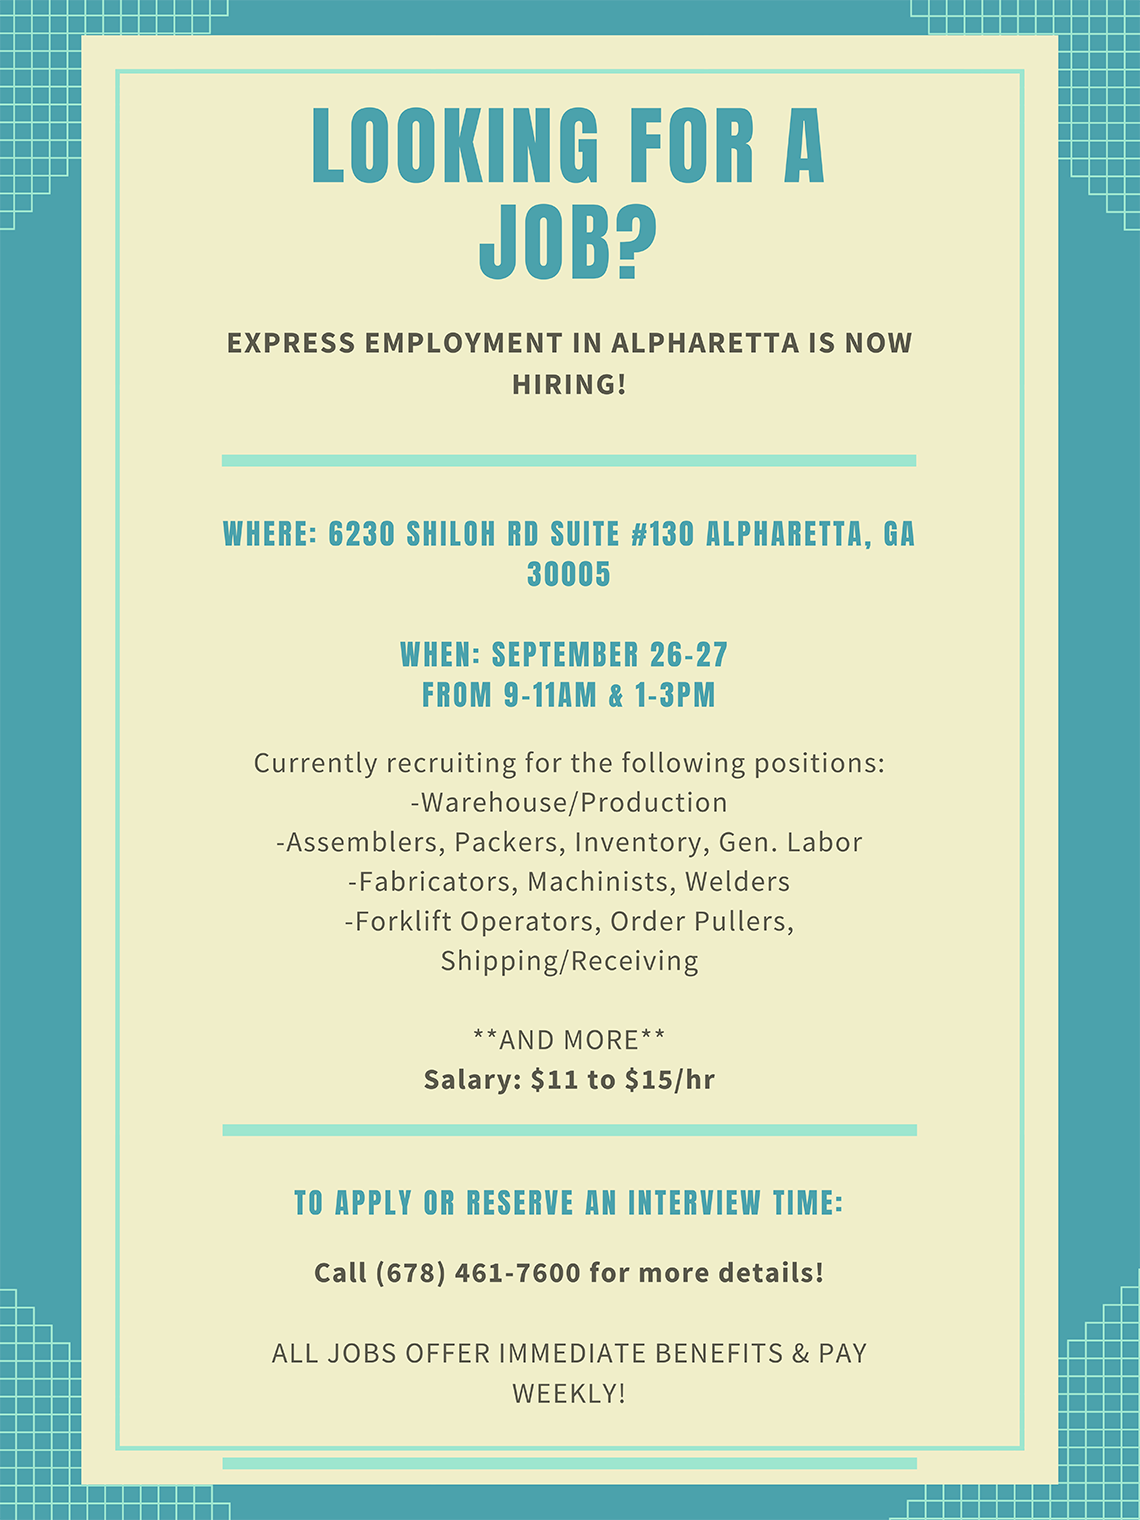 Express Job Fairs in Alpharetta, GA - Get Hired with Express